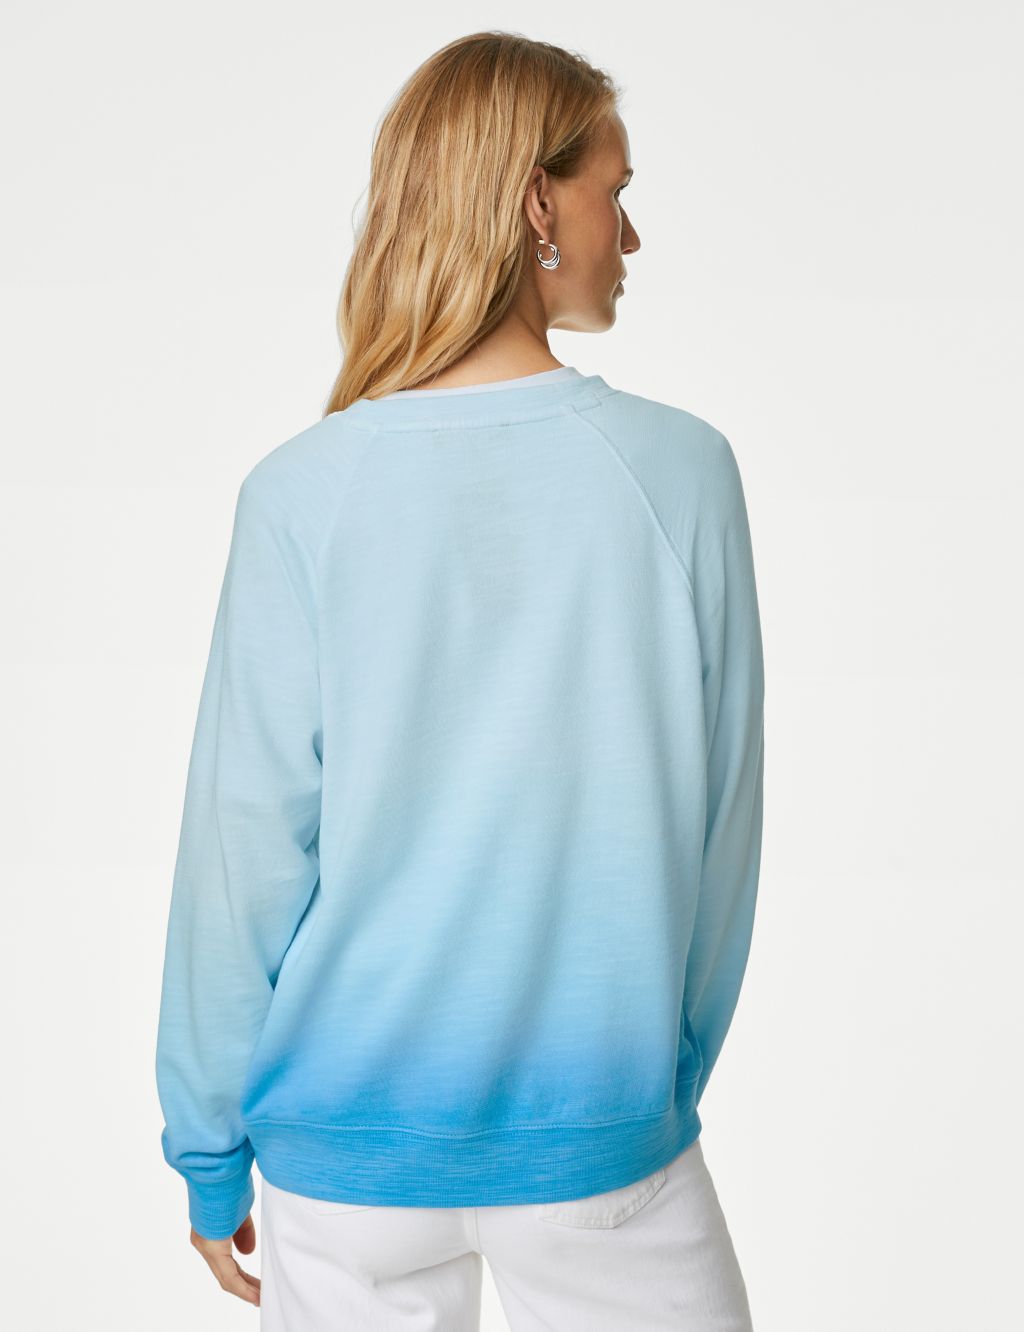 Pure Cotton Printed Sweatshirt image 5